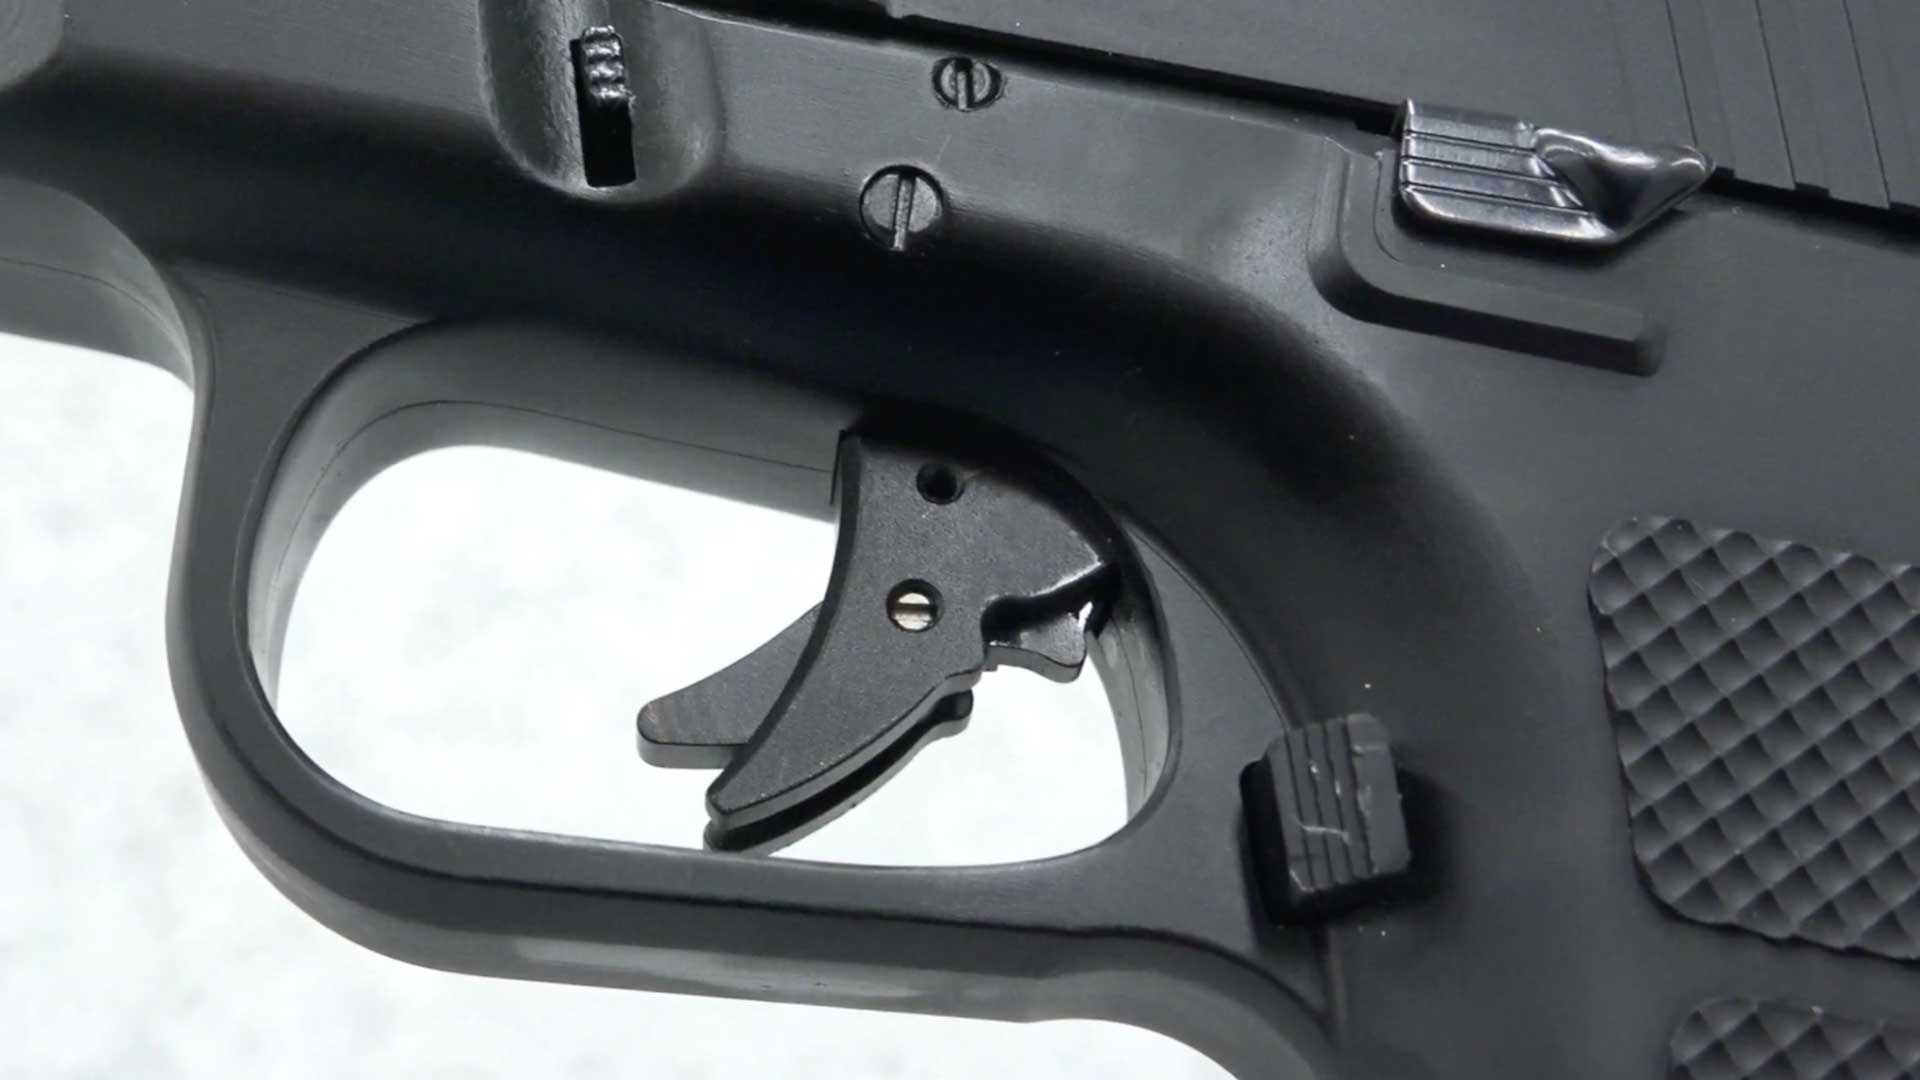 left side black pistol handgun trigger gun parts